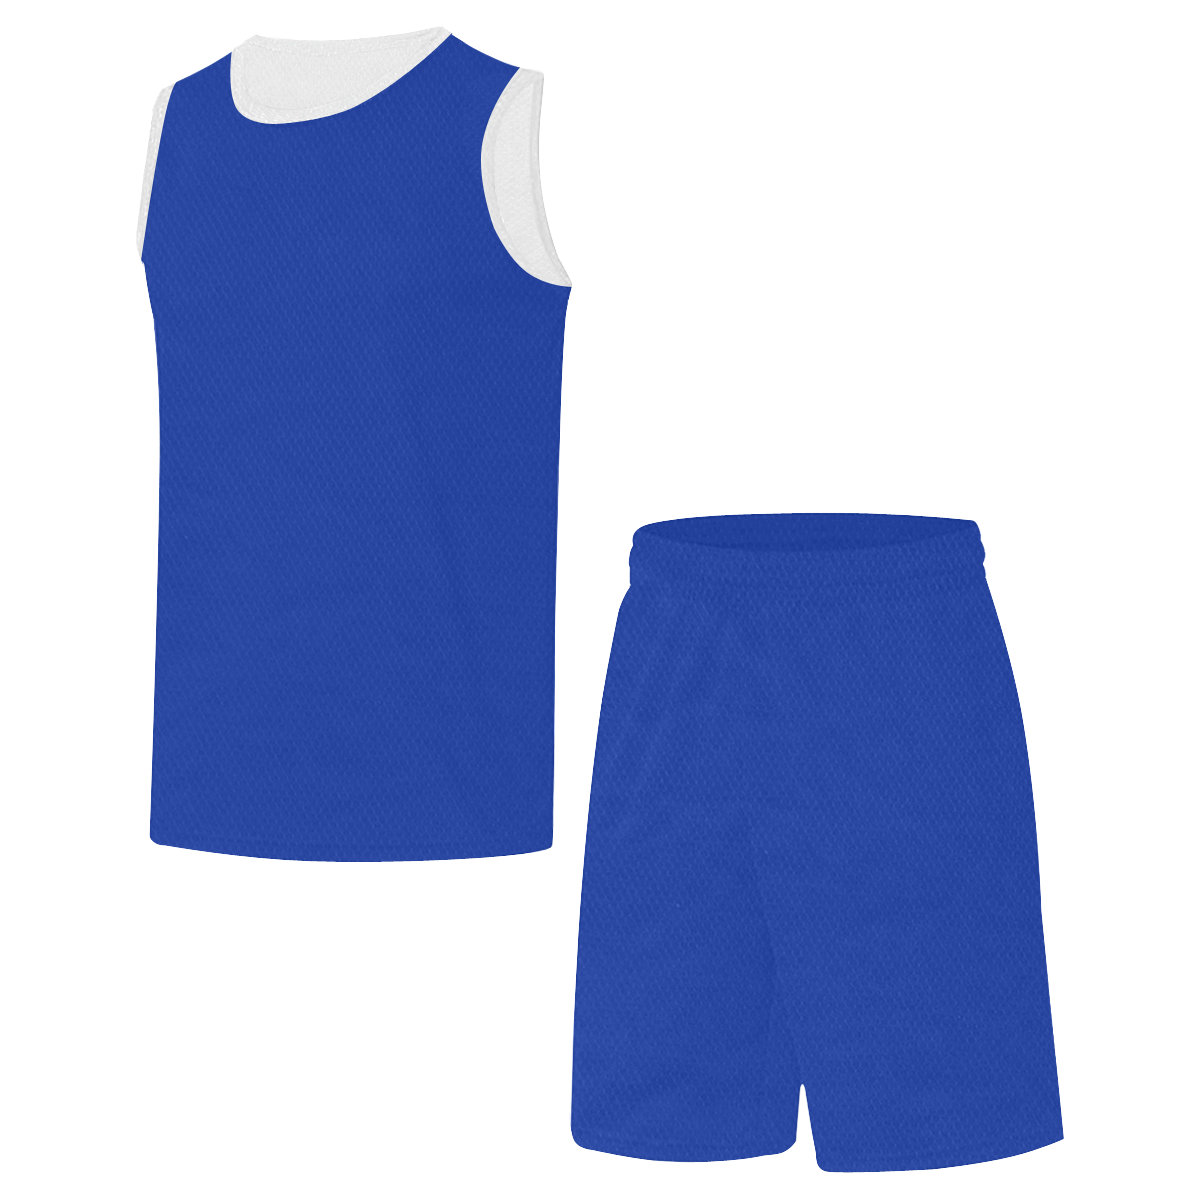 color Egyptian blue All Over Print Basketball Uniform